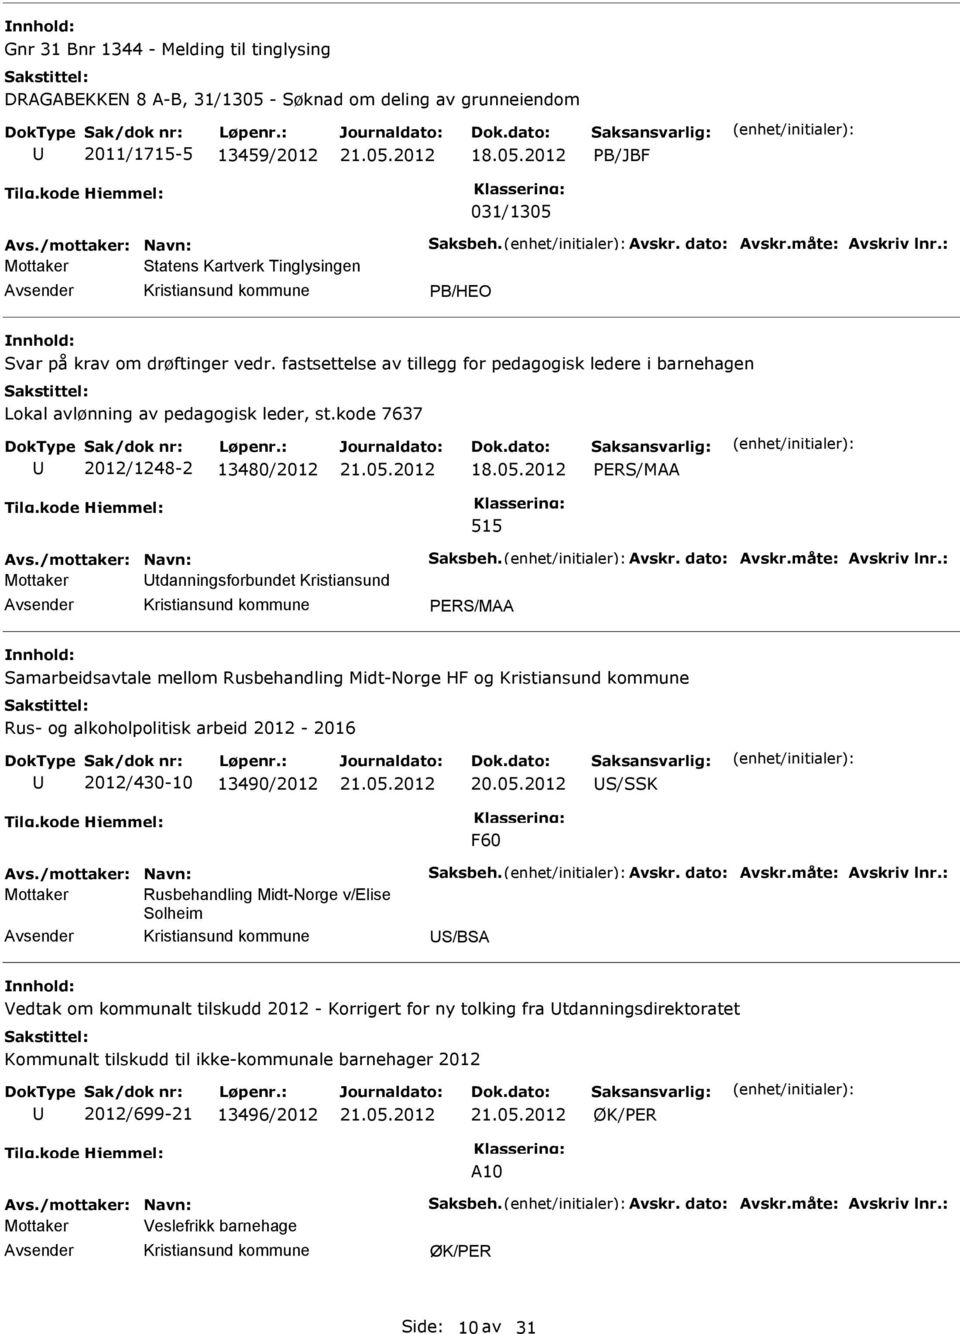 2012 PERS/M 515 tdanningsforbundet Kristiansund PERS/M Samarbeidsavtale mellom Rusbehandling Midt-Norge HF og Rus- og alkoholpolitisk arbeid 2012-2016 2012/430-10 13490/2012 20.05.